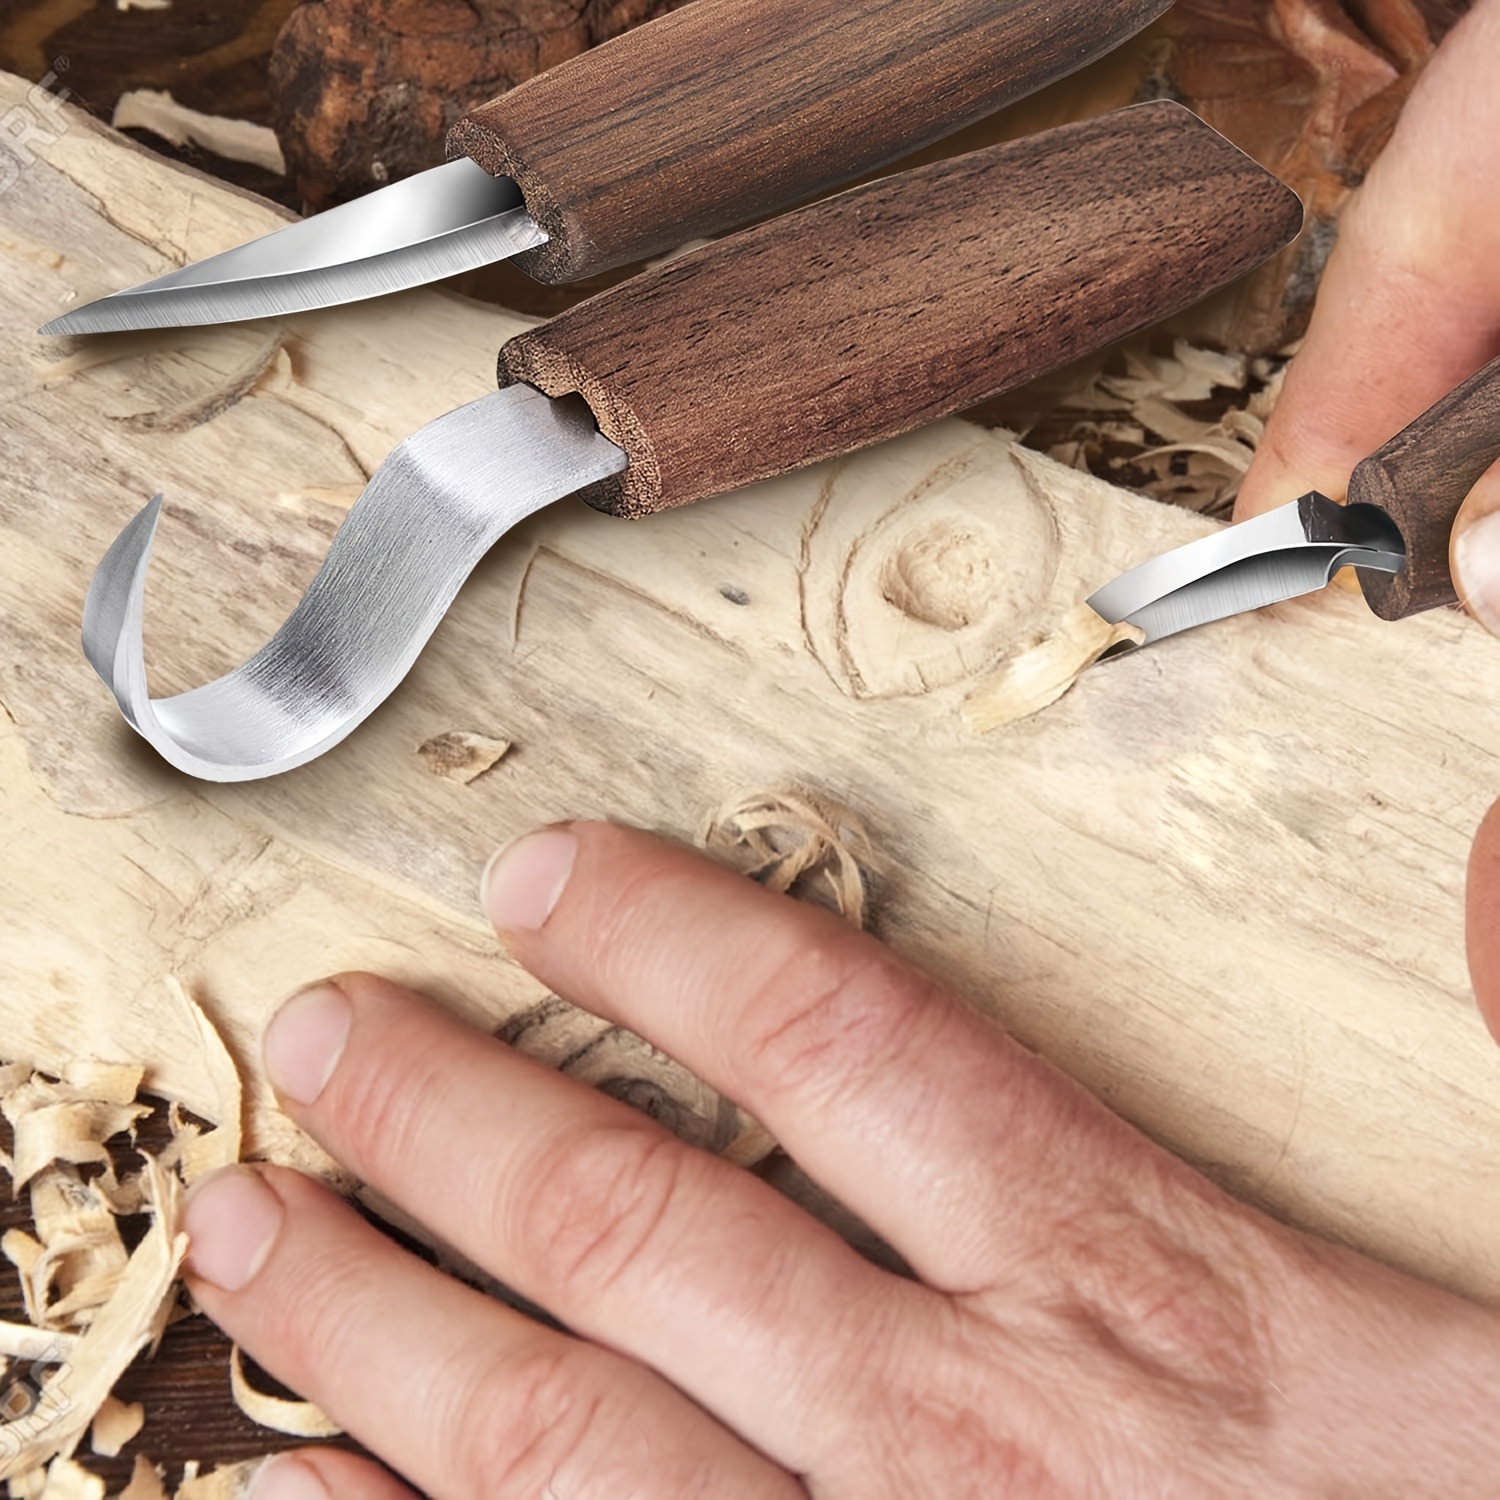 Wood Carving Tools 7 In 1 Wood Carving Knife Set With Carving Hook Knife  Wood Whittling Knife Chip Carving Knife Gloves Carving Knife Sharpener For  Diy Sculpture Carpenter Experts Beginners